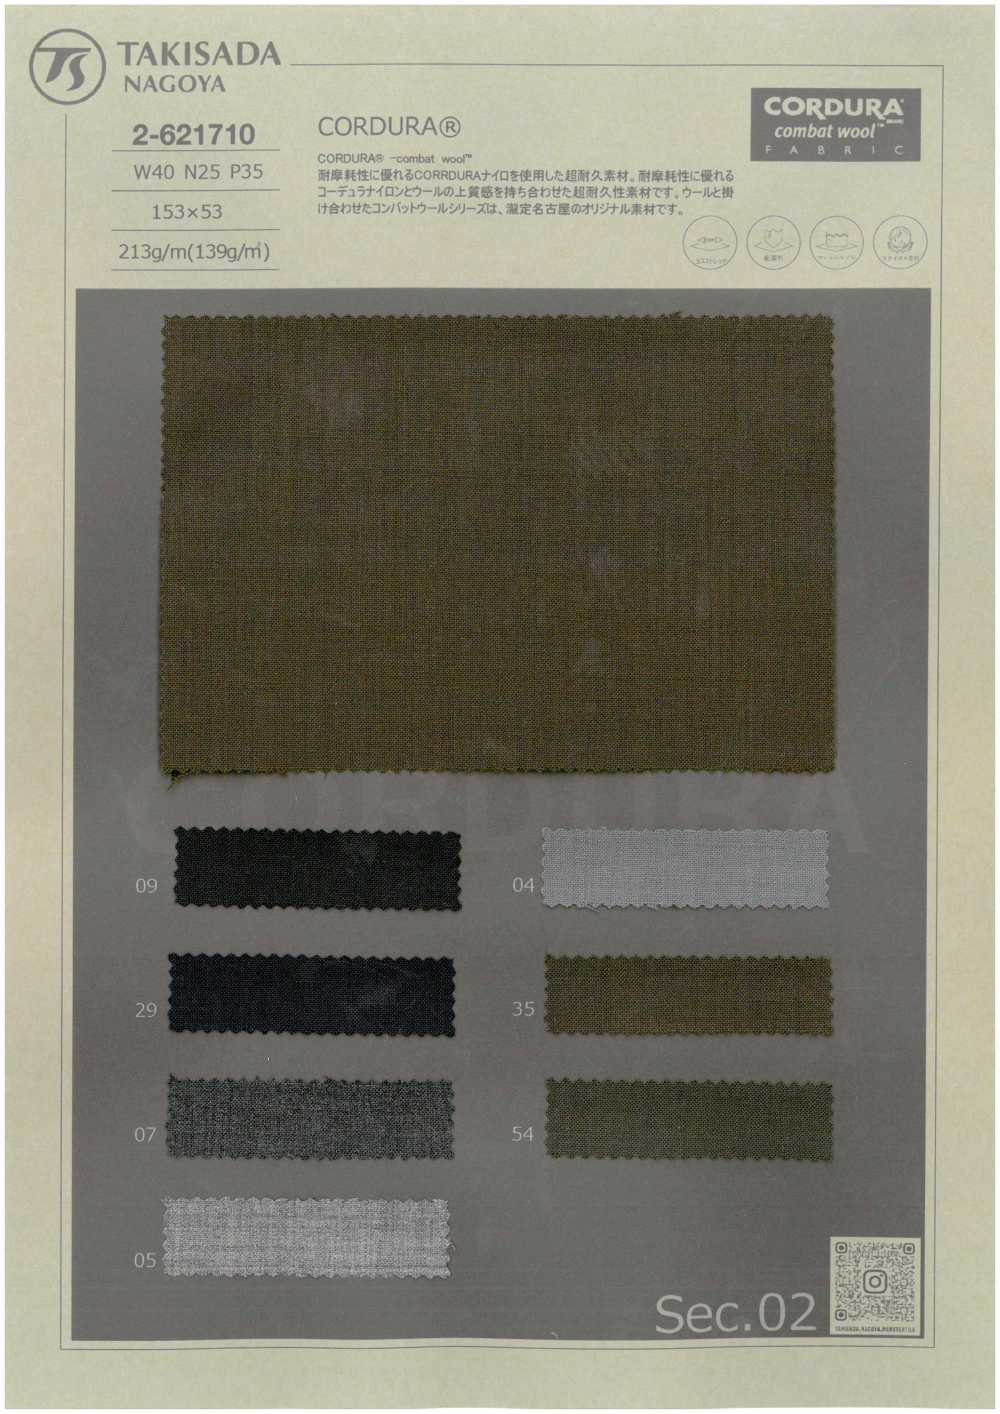 2-621710 CORDURA (R) COMBATWOOL Tropical[Textile / Fabric] Takisada Nagoya